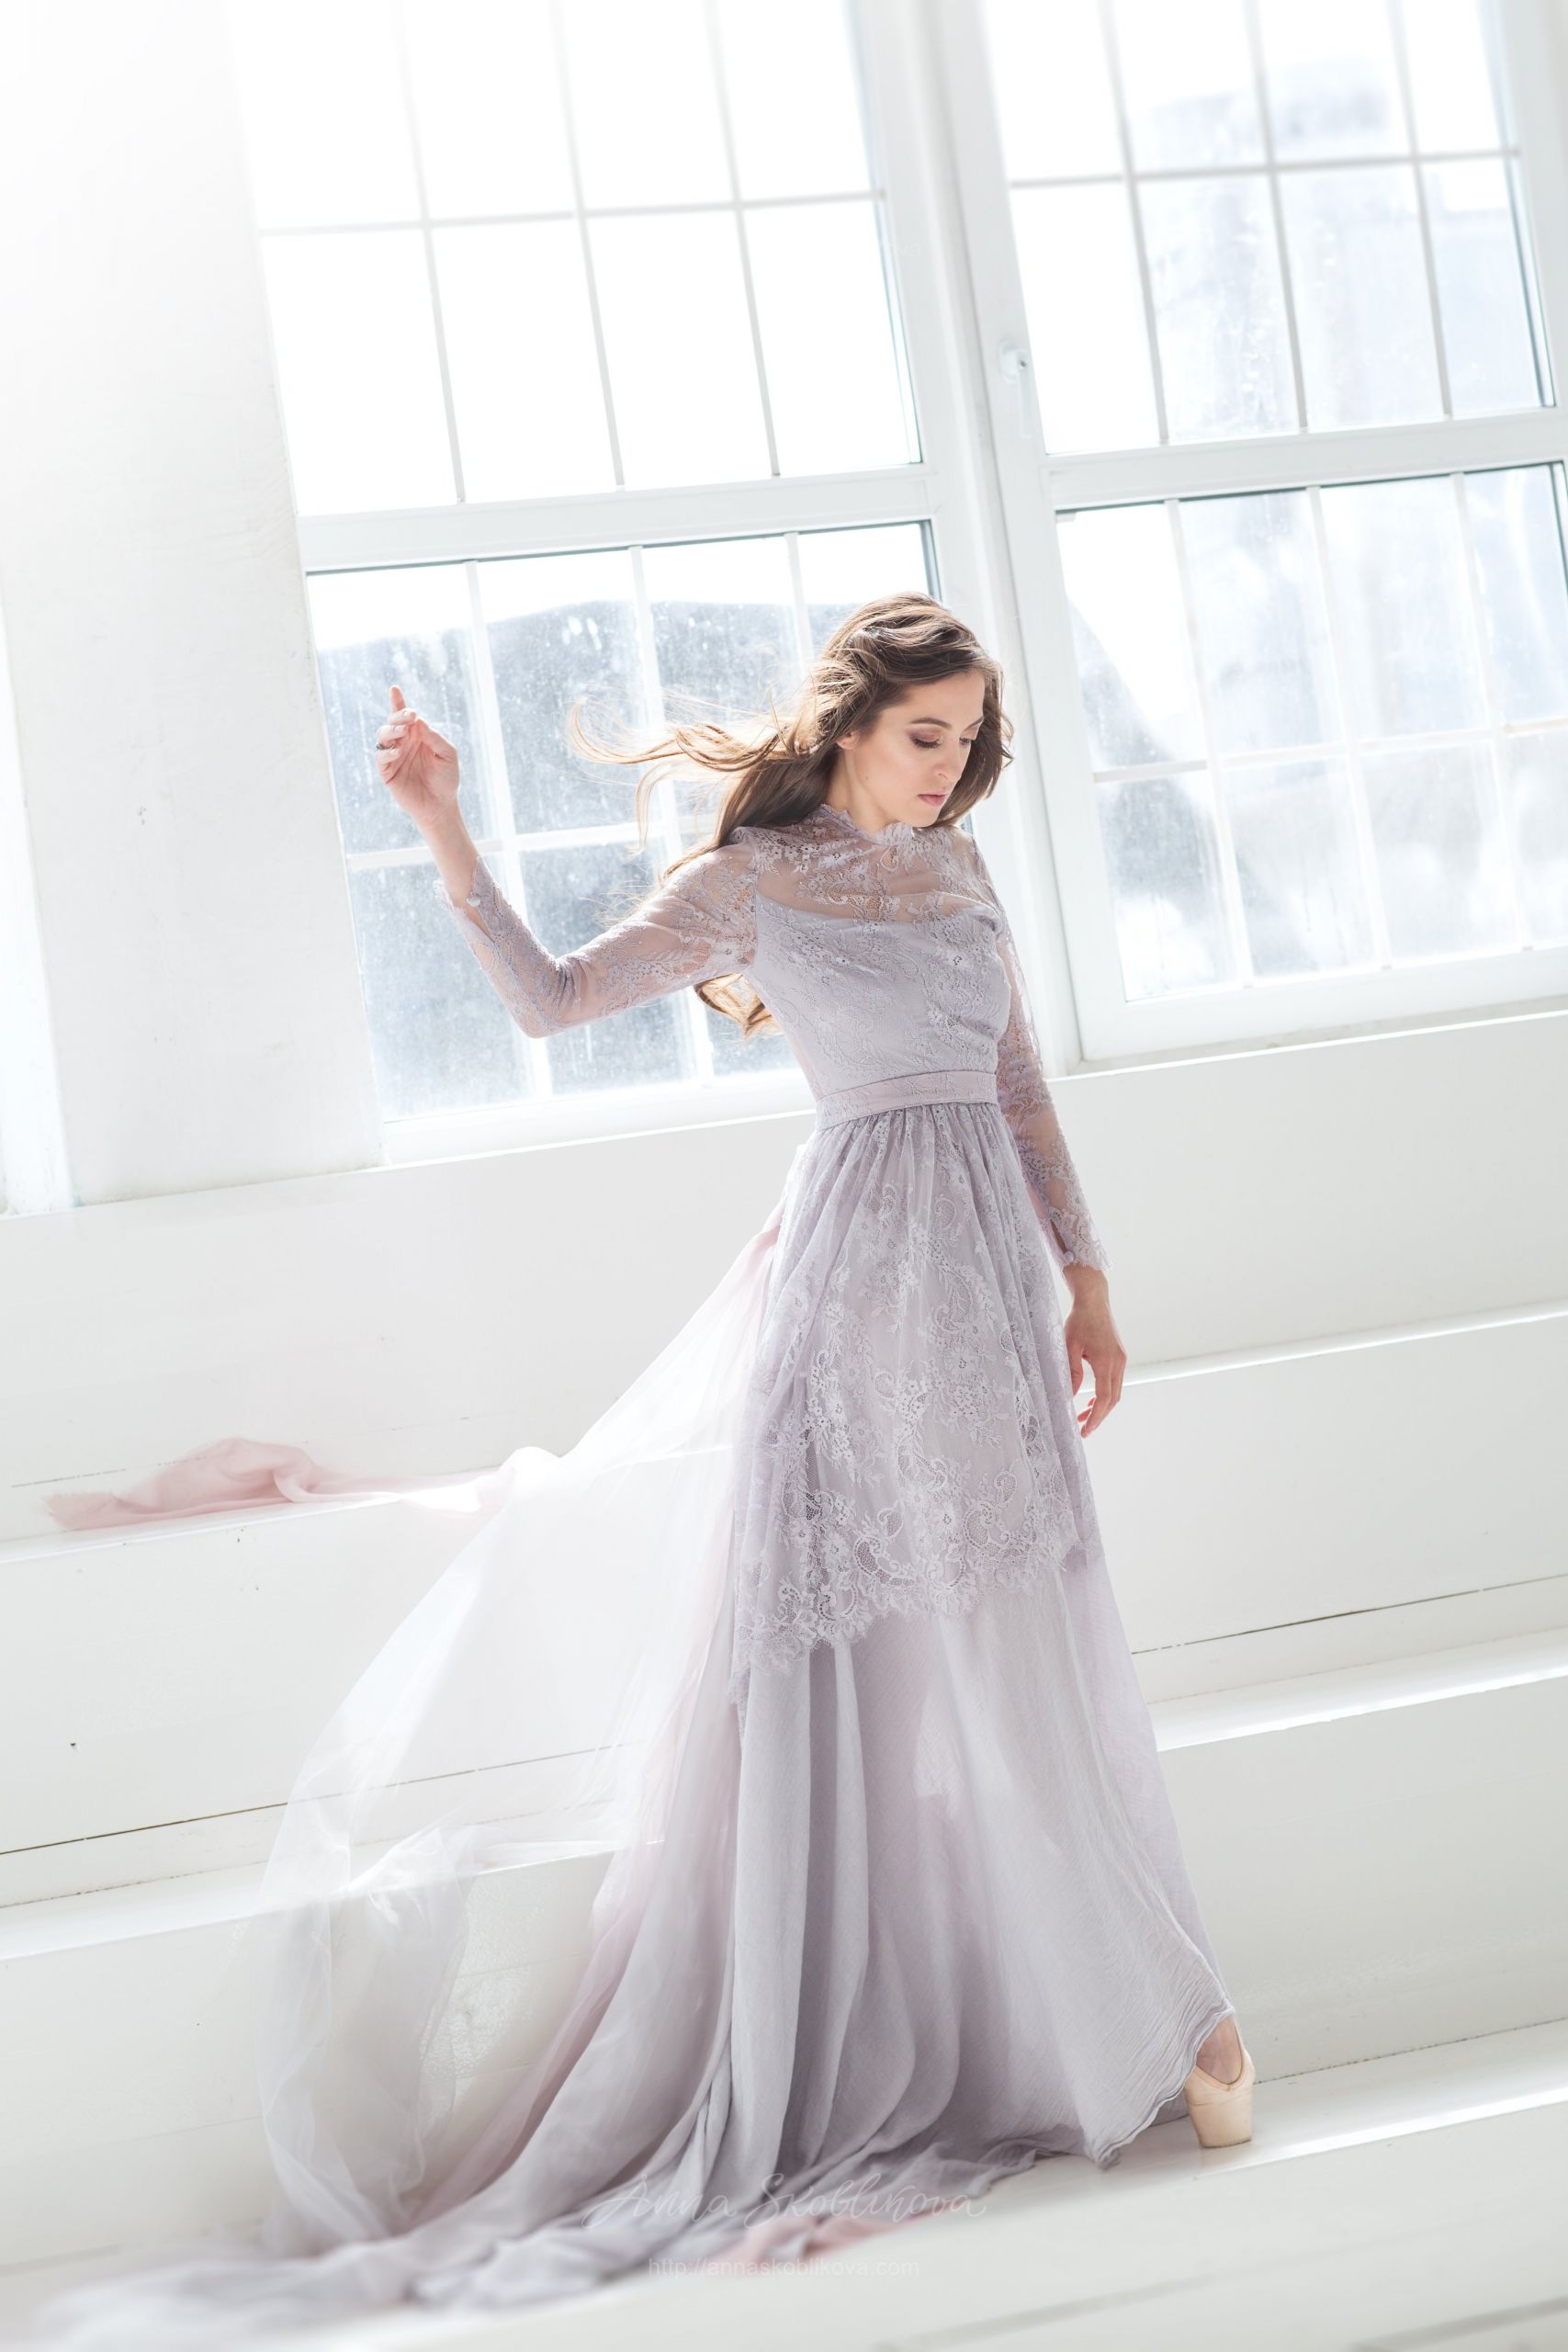 Lilac Wedding Dress
 Classic long sleeves wedding dress of muted grey lilac